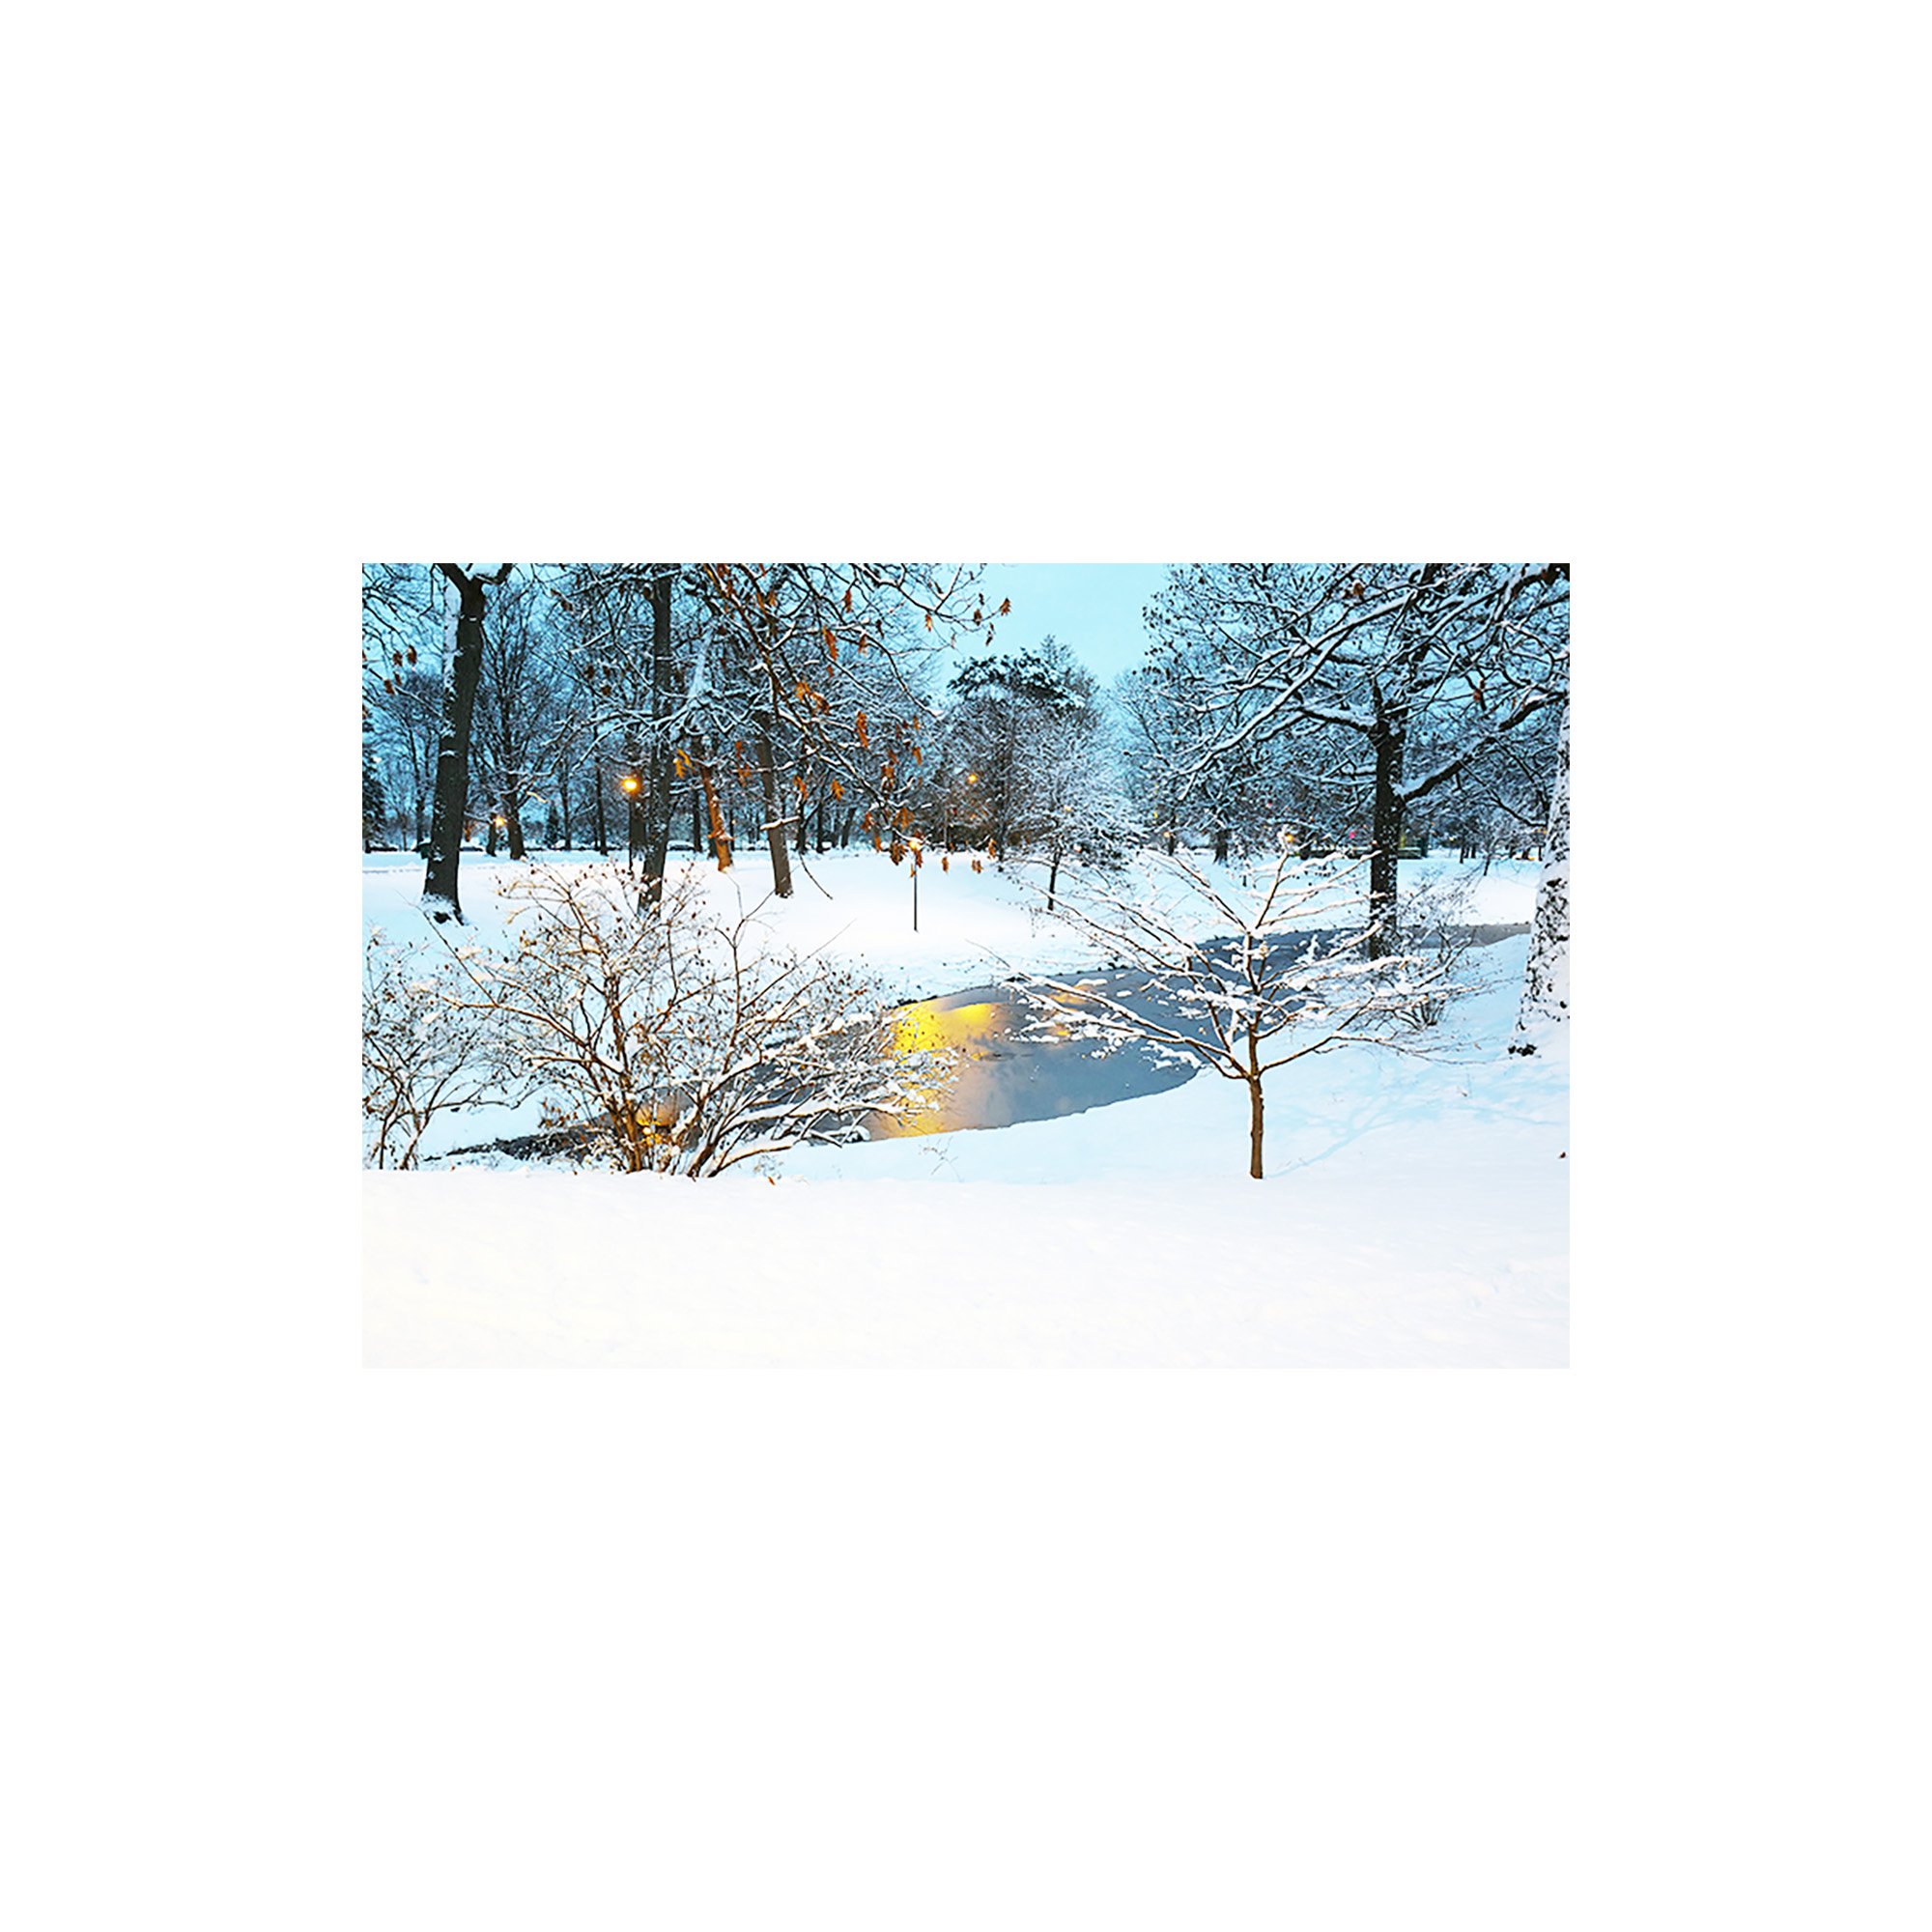 Untitled-1 - Fall_Winter - Brightness 100 - 3 copy.jpg